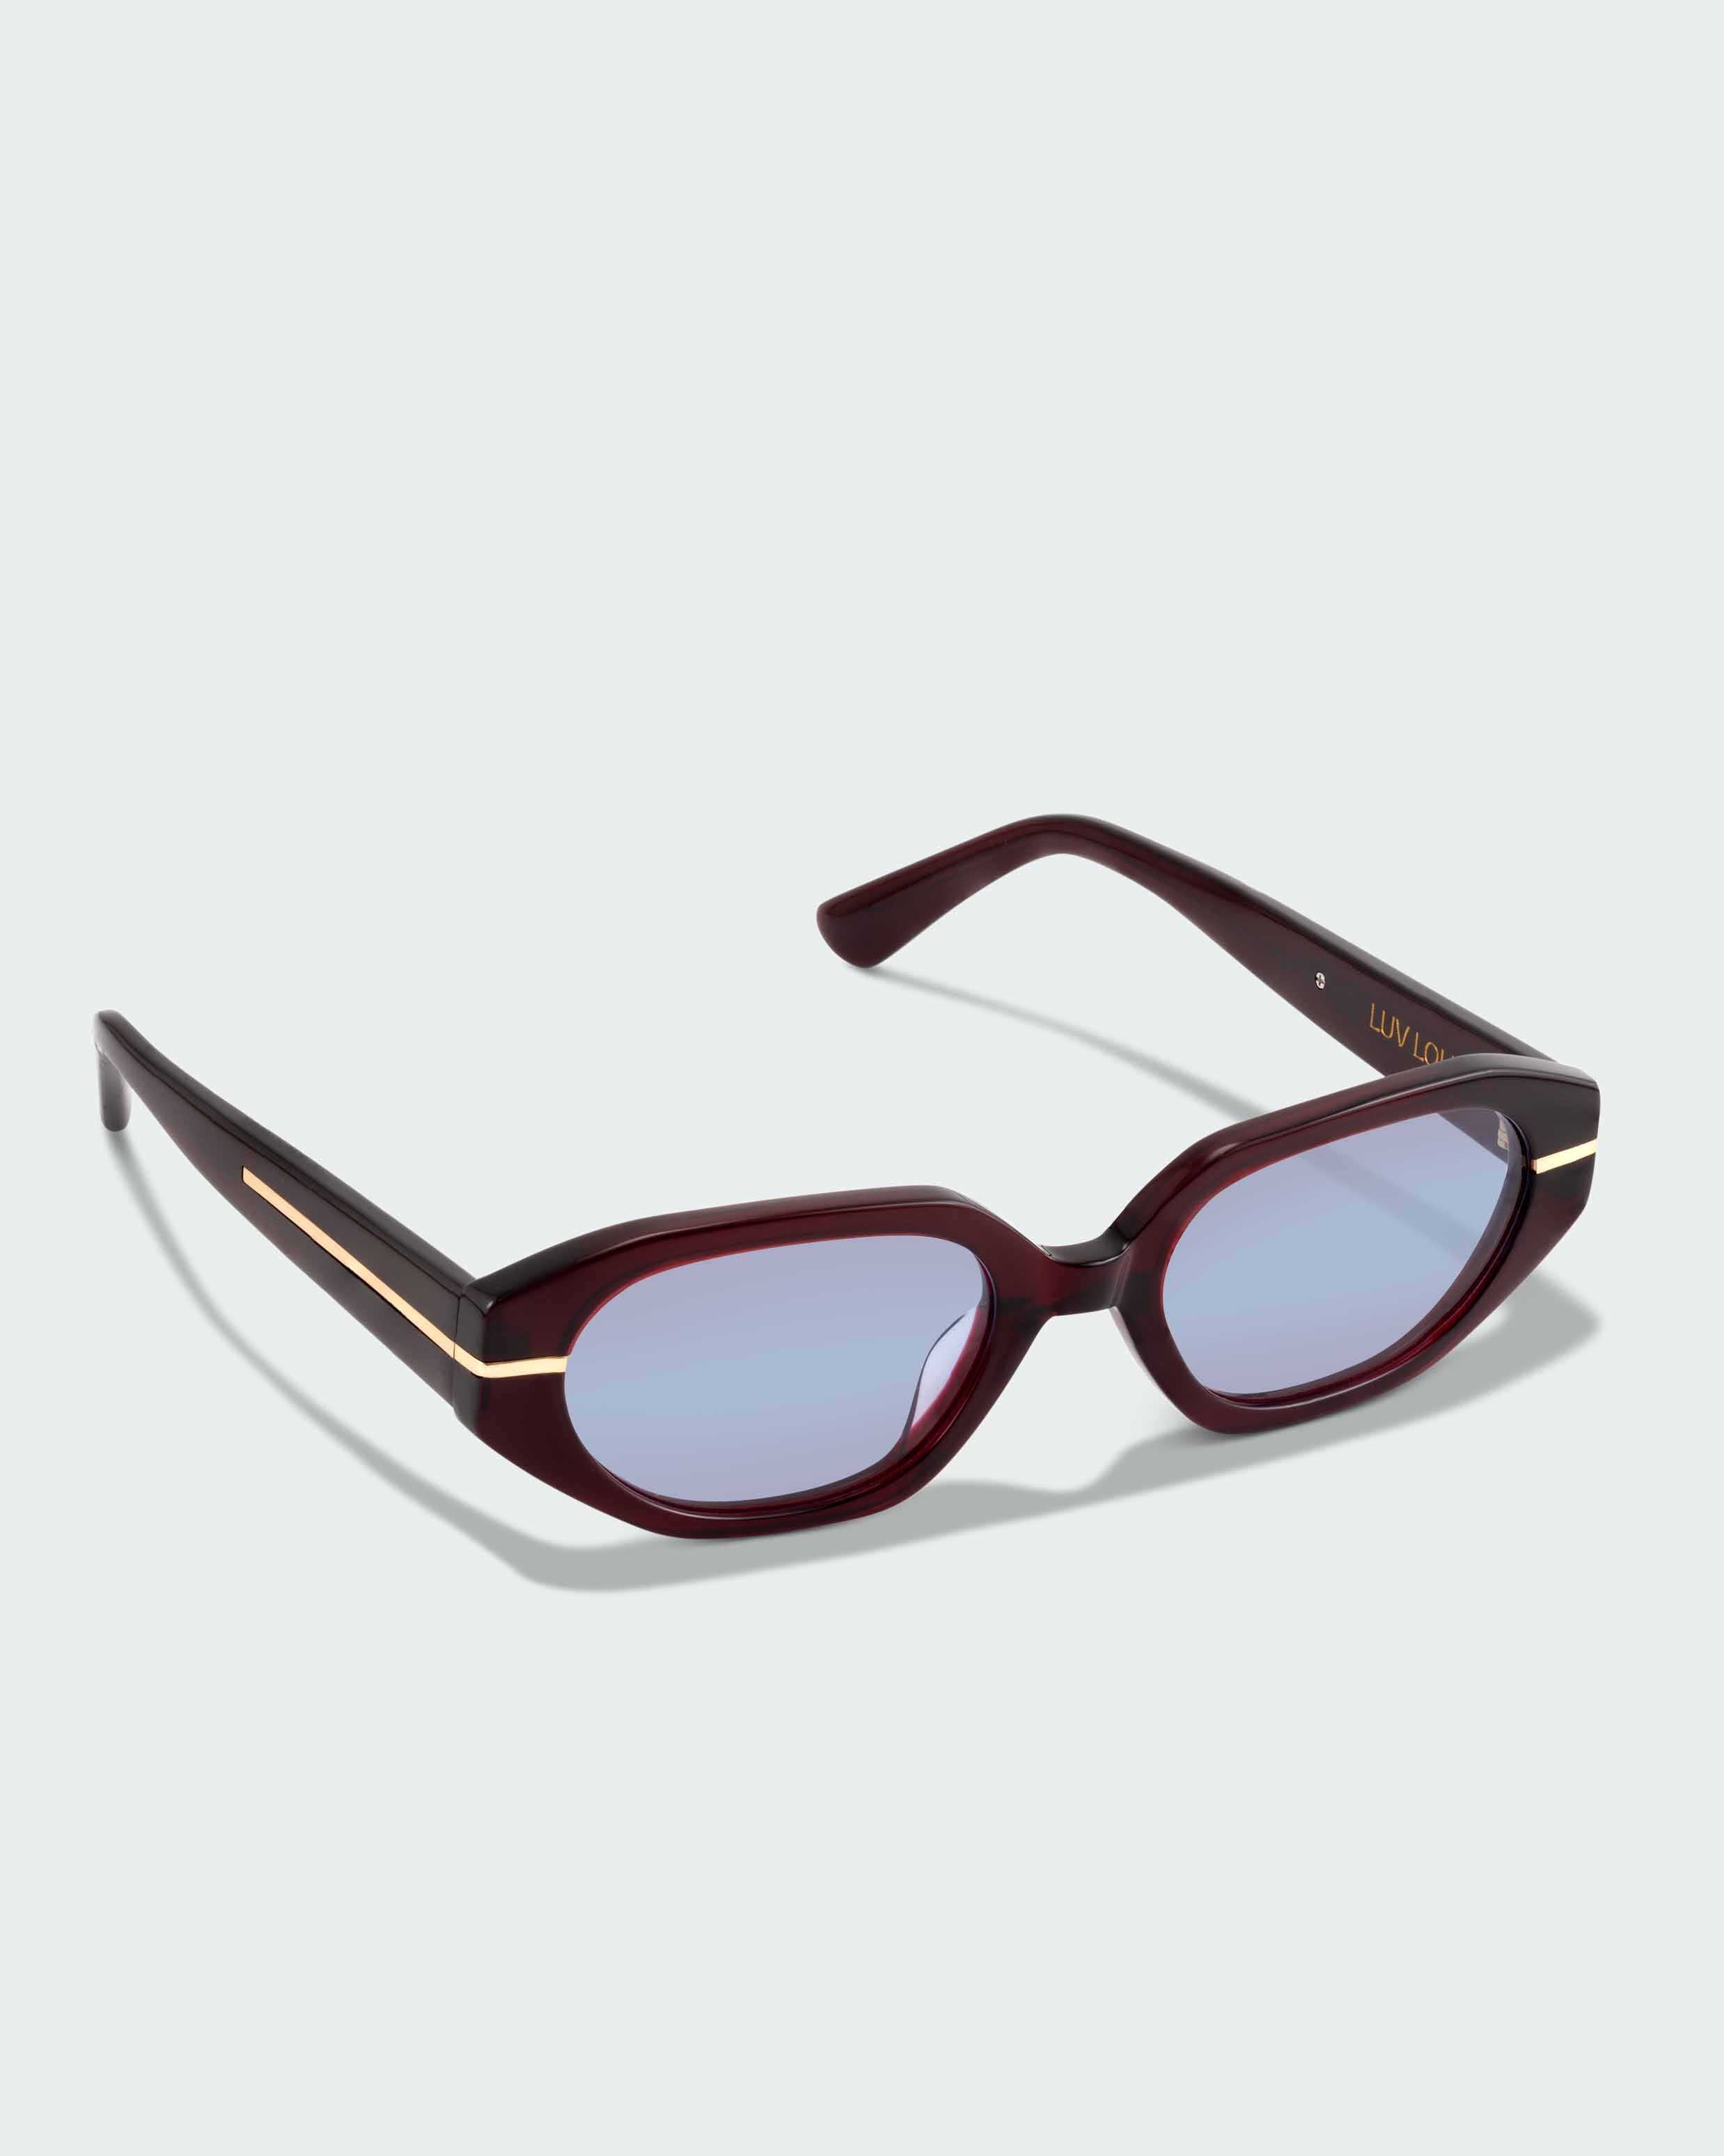 New Arrivals | Women's Sunglasses & Eyewear - Luv Lou